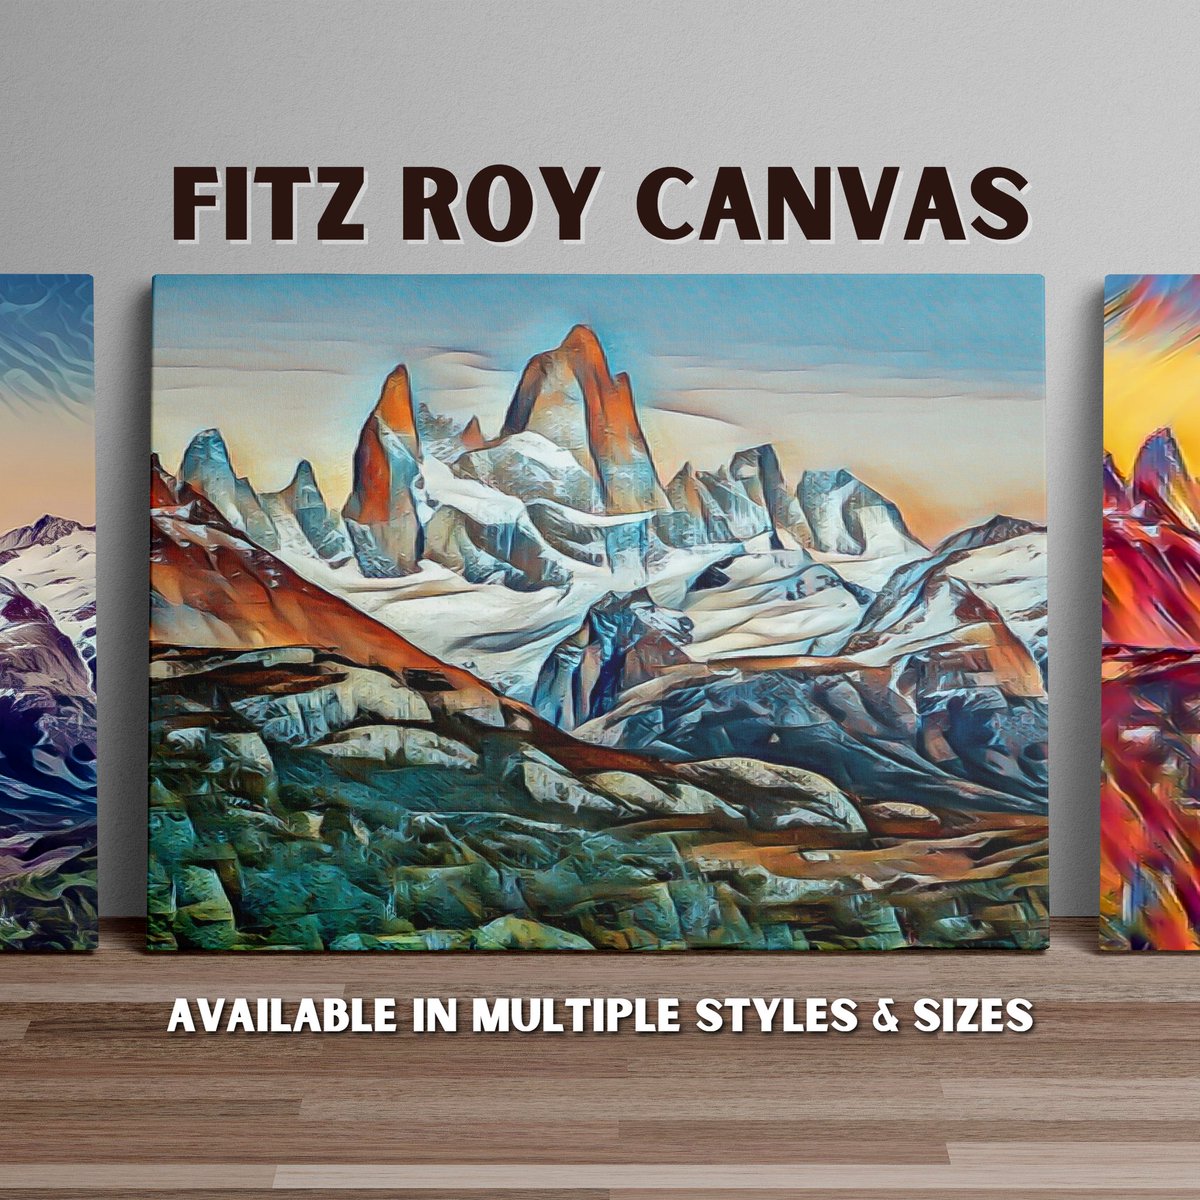 Fitz Roy Canvas Wall Art Print

etsy.com/listing/134695…

#fitzroy #patagonia #argentina #canvaswallart #travelprint #travelgift #traveldecor